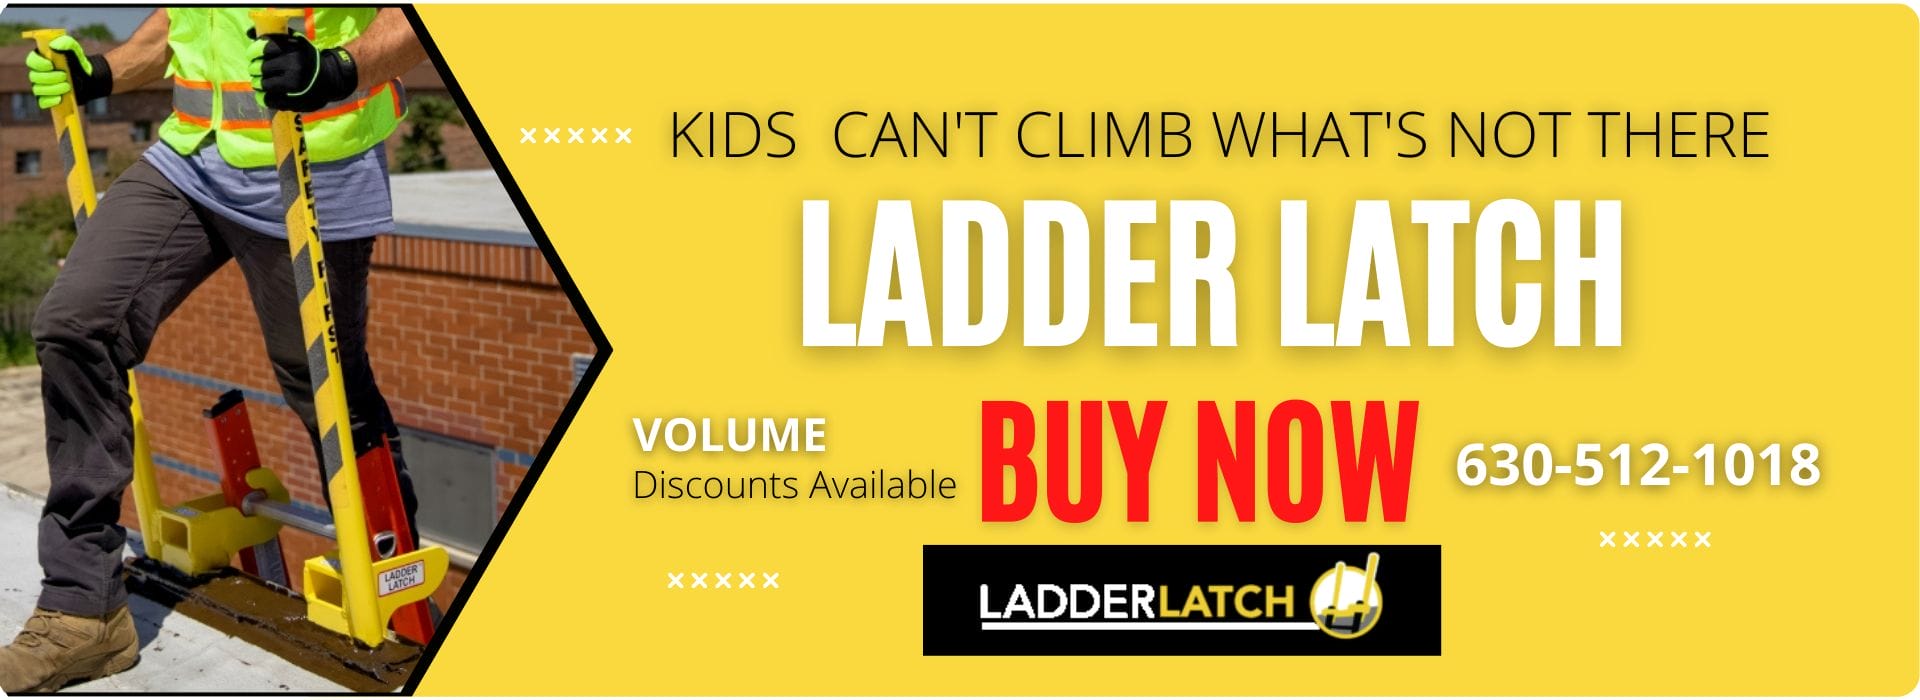 Ladder Latch 3 1